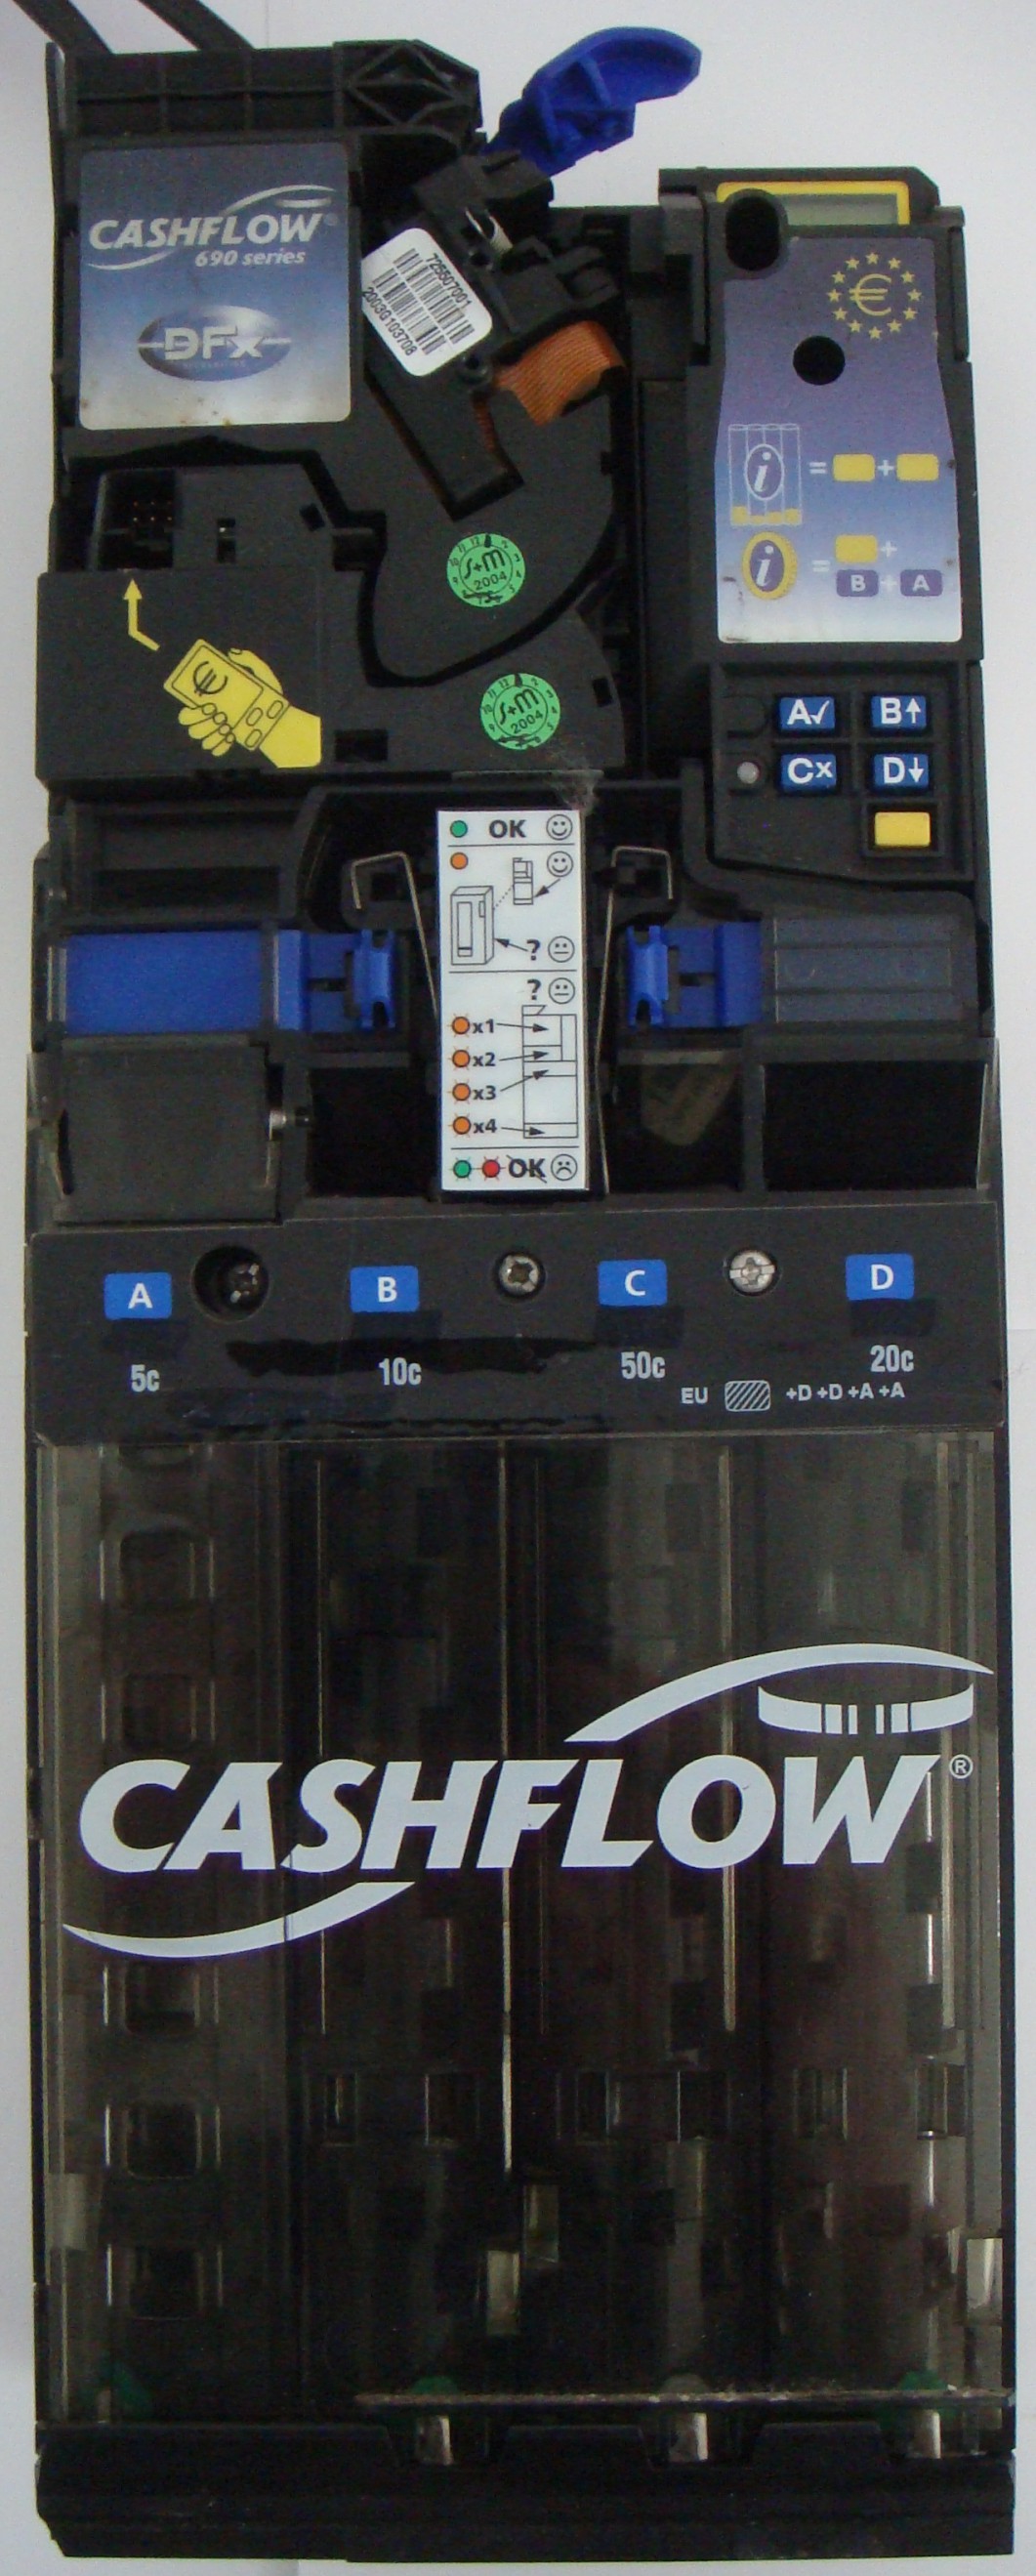 Cashflow 690